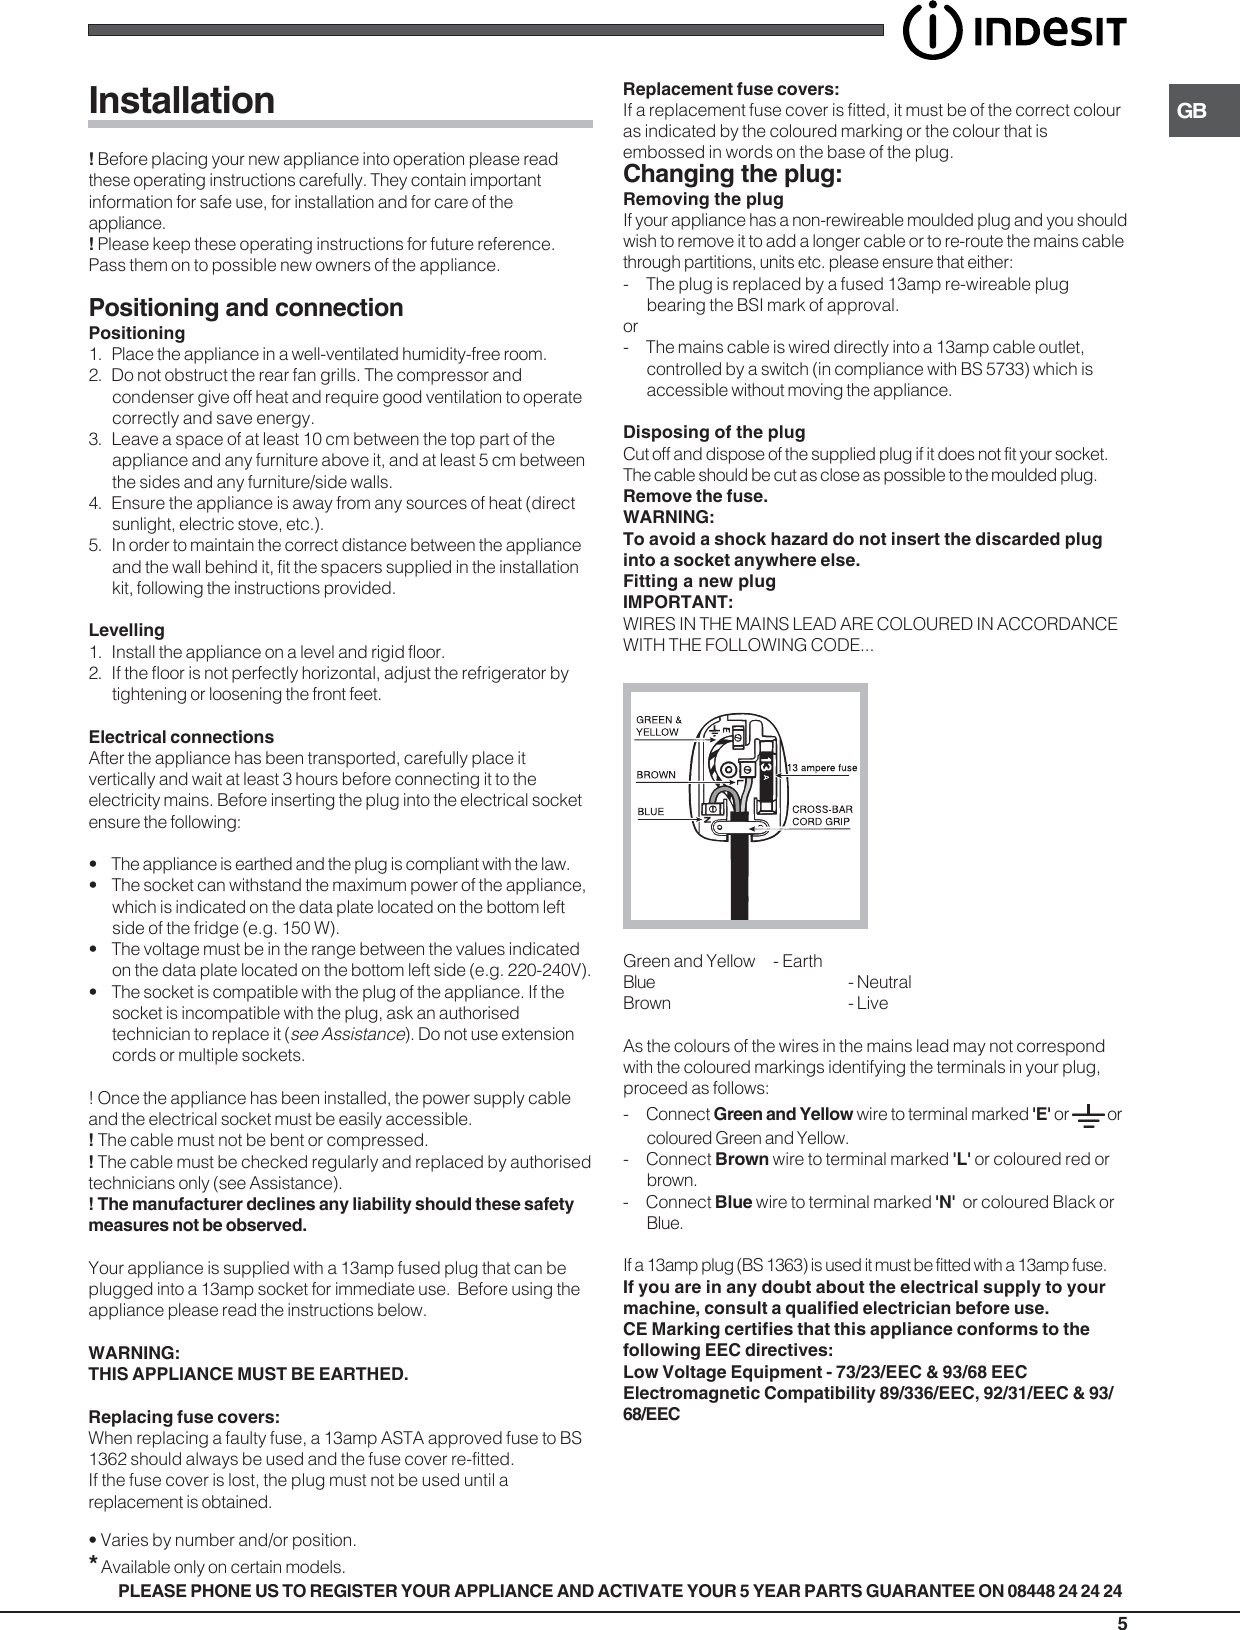 Page 5 of 12 - Indesit Indesit-Refrigerator-Ban-40-Users-Manual- 19508693000gb-tr  Indesit-refrigerator-ban-40-users-manual